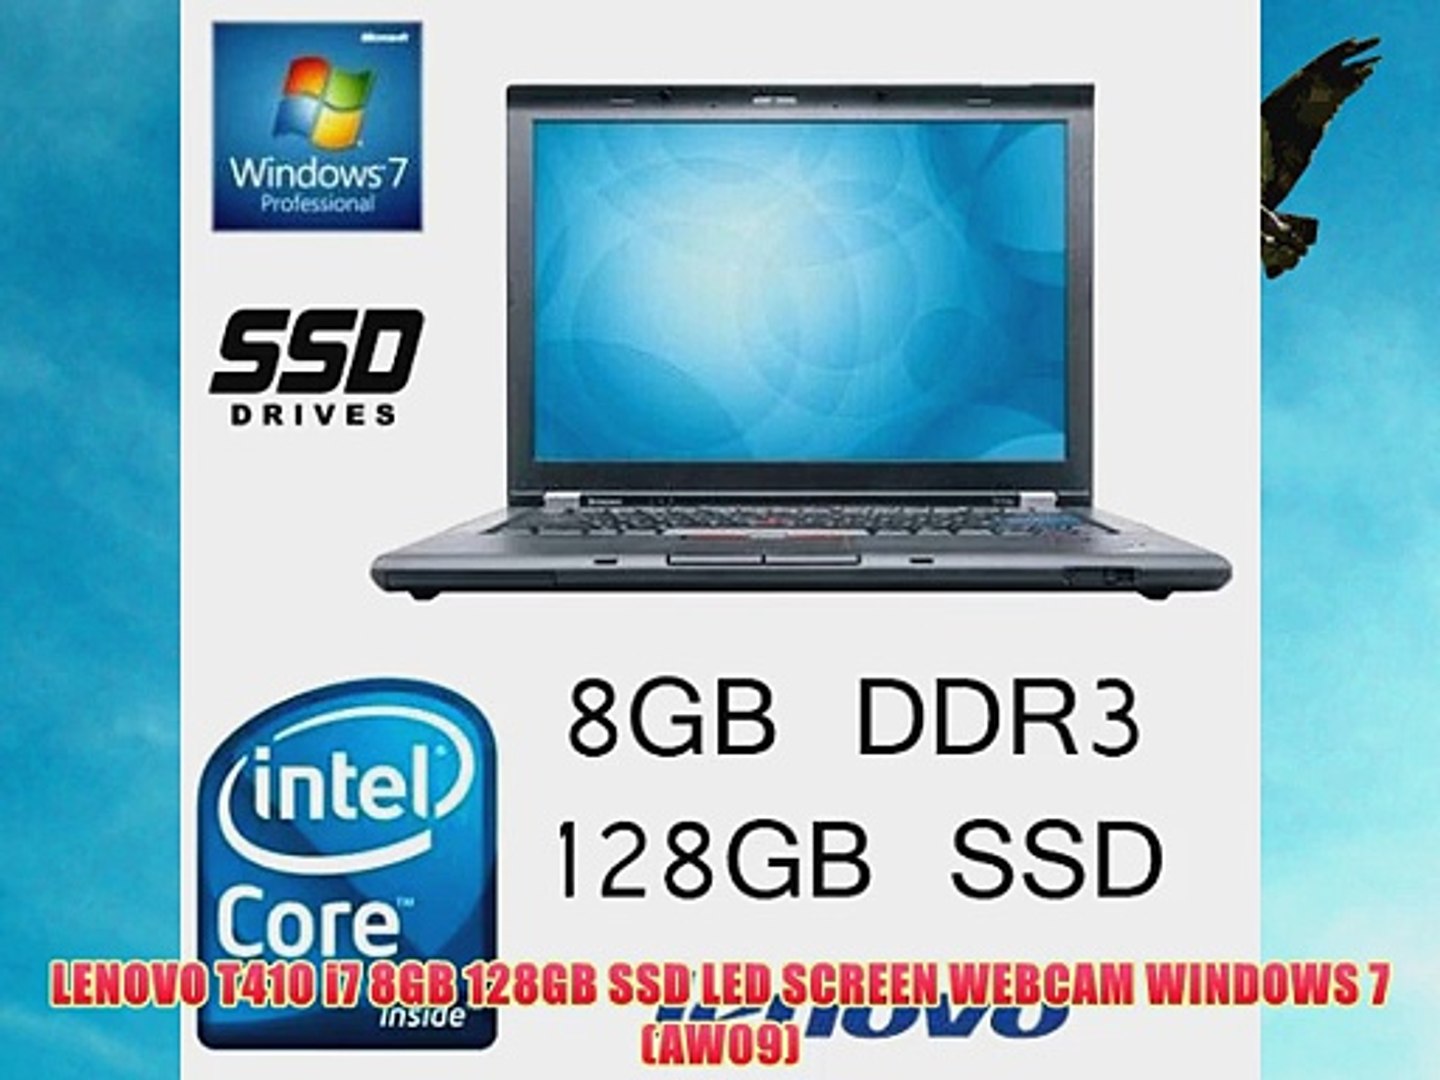 LENOVO T410 i7 8GB 128GB SSD LED SCREEN WEBCAM WINDOWS 7 (AW09) - video  Dailymotion